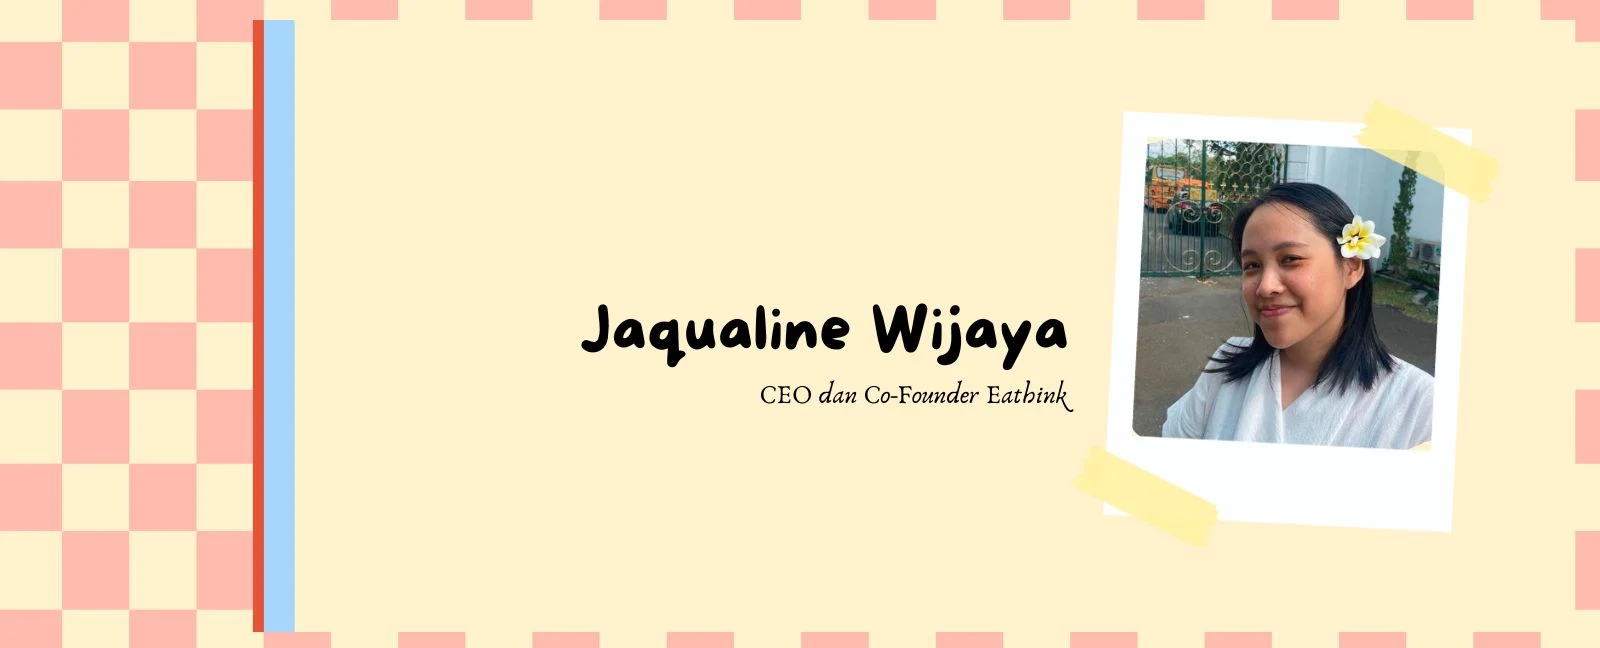 Jaqualine Wijaya